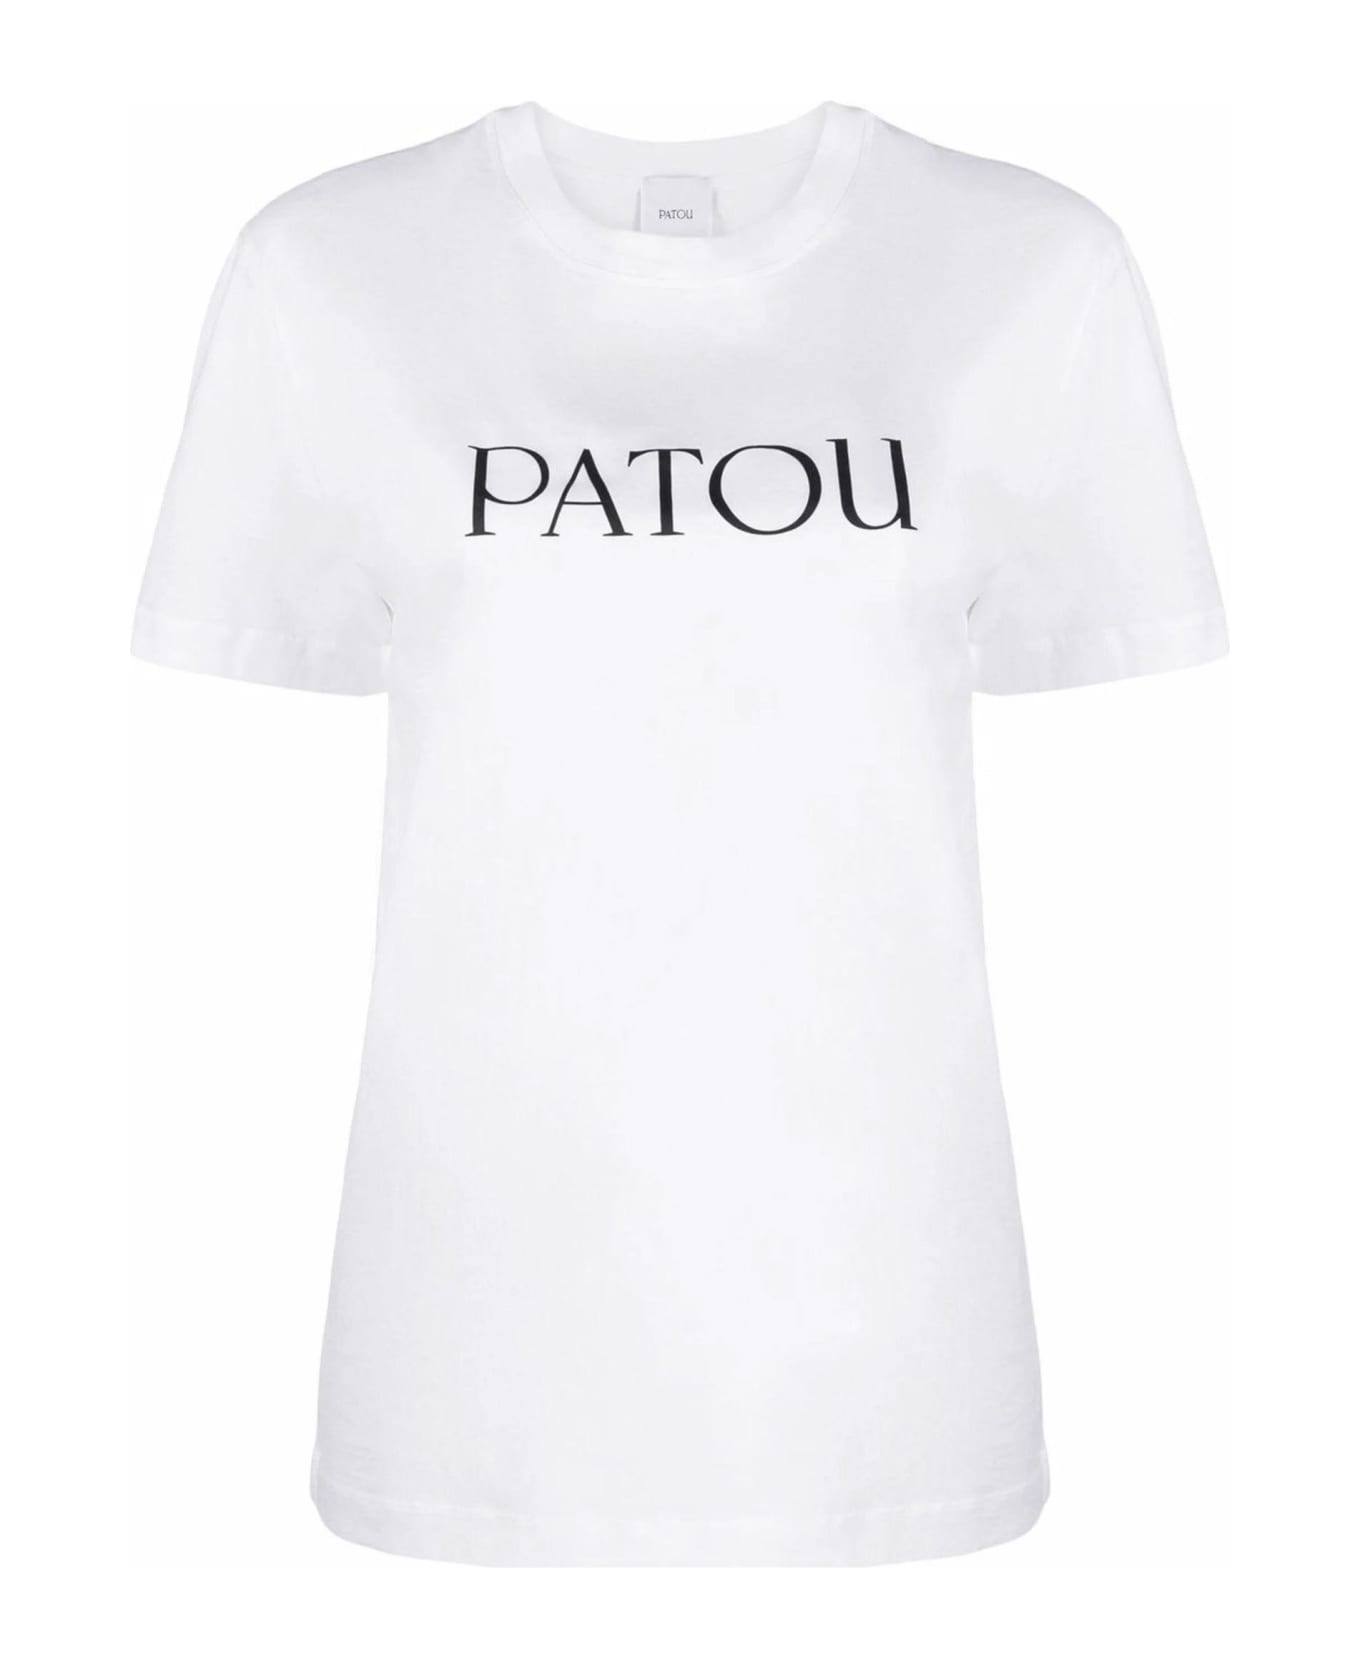 Patou White Organic Cotton T-shirt - White